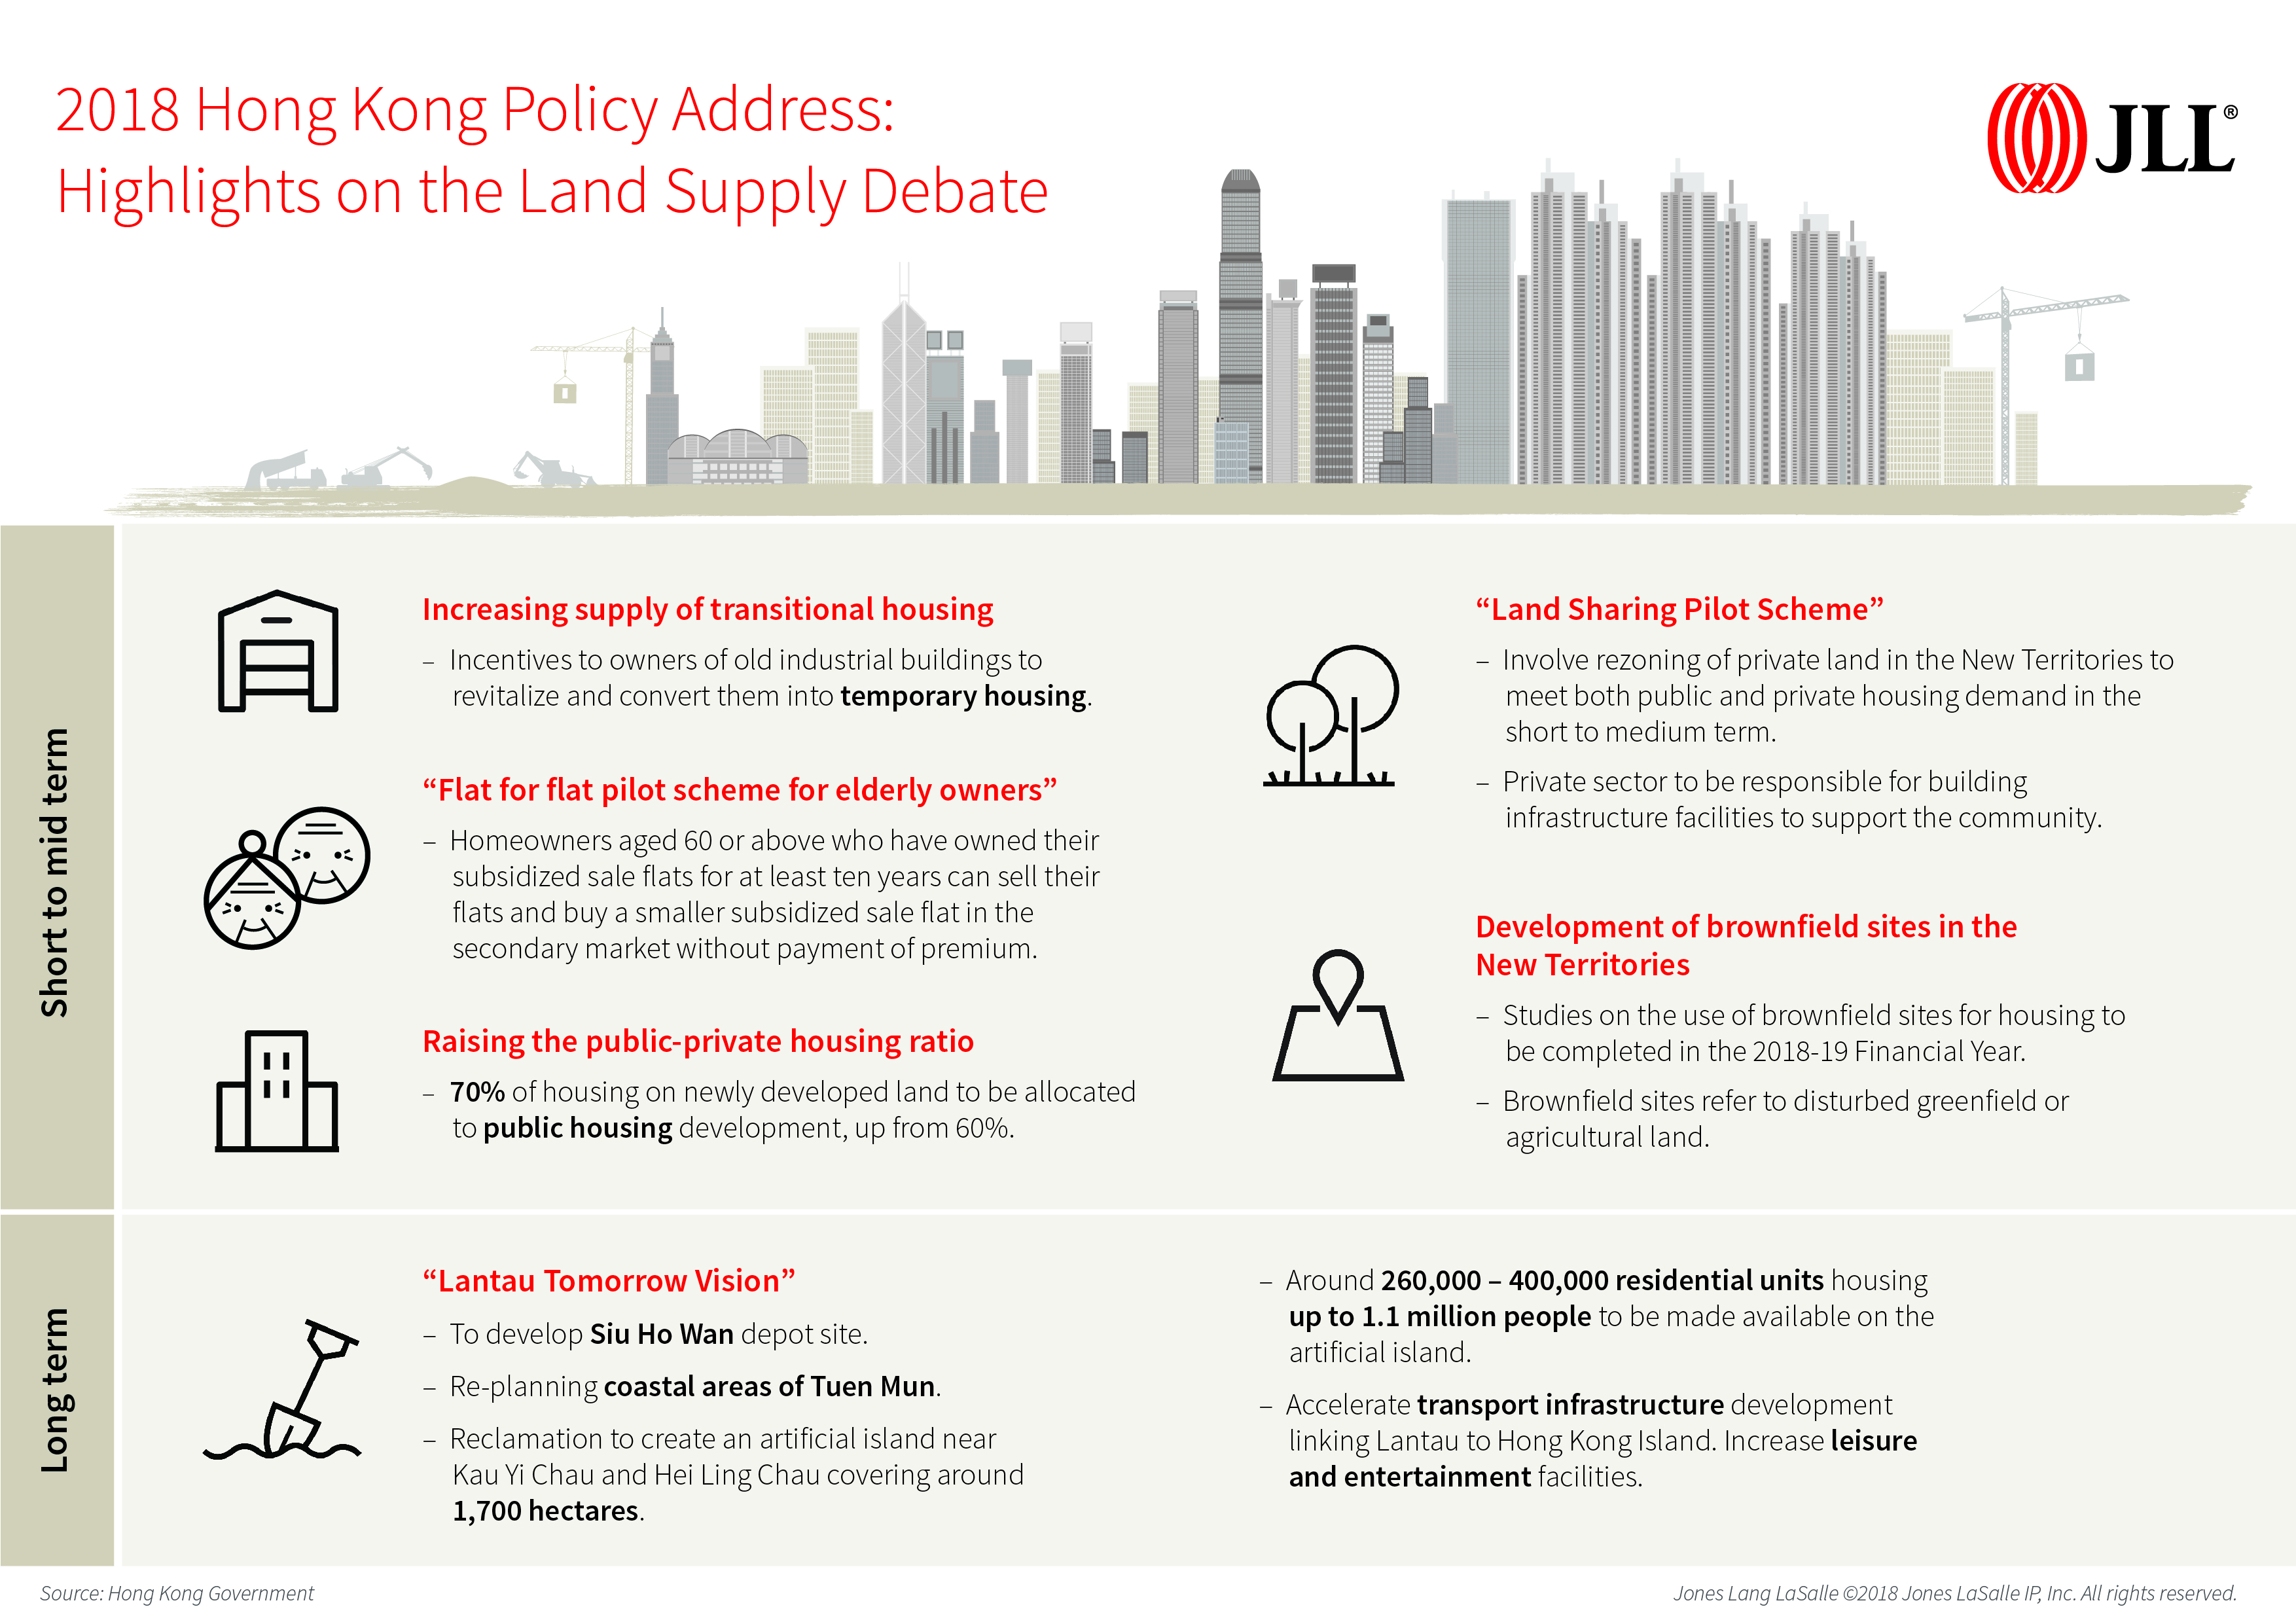 AP-HK-RES-NEWS-Policy-Address-Infogrphics-2018-1012-Image